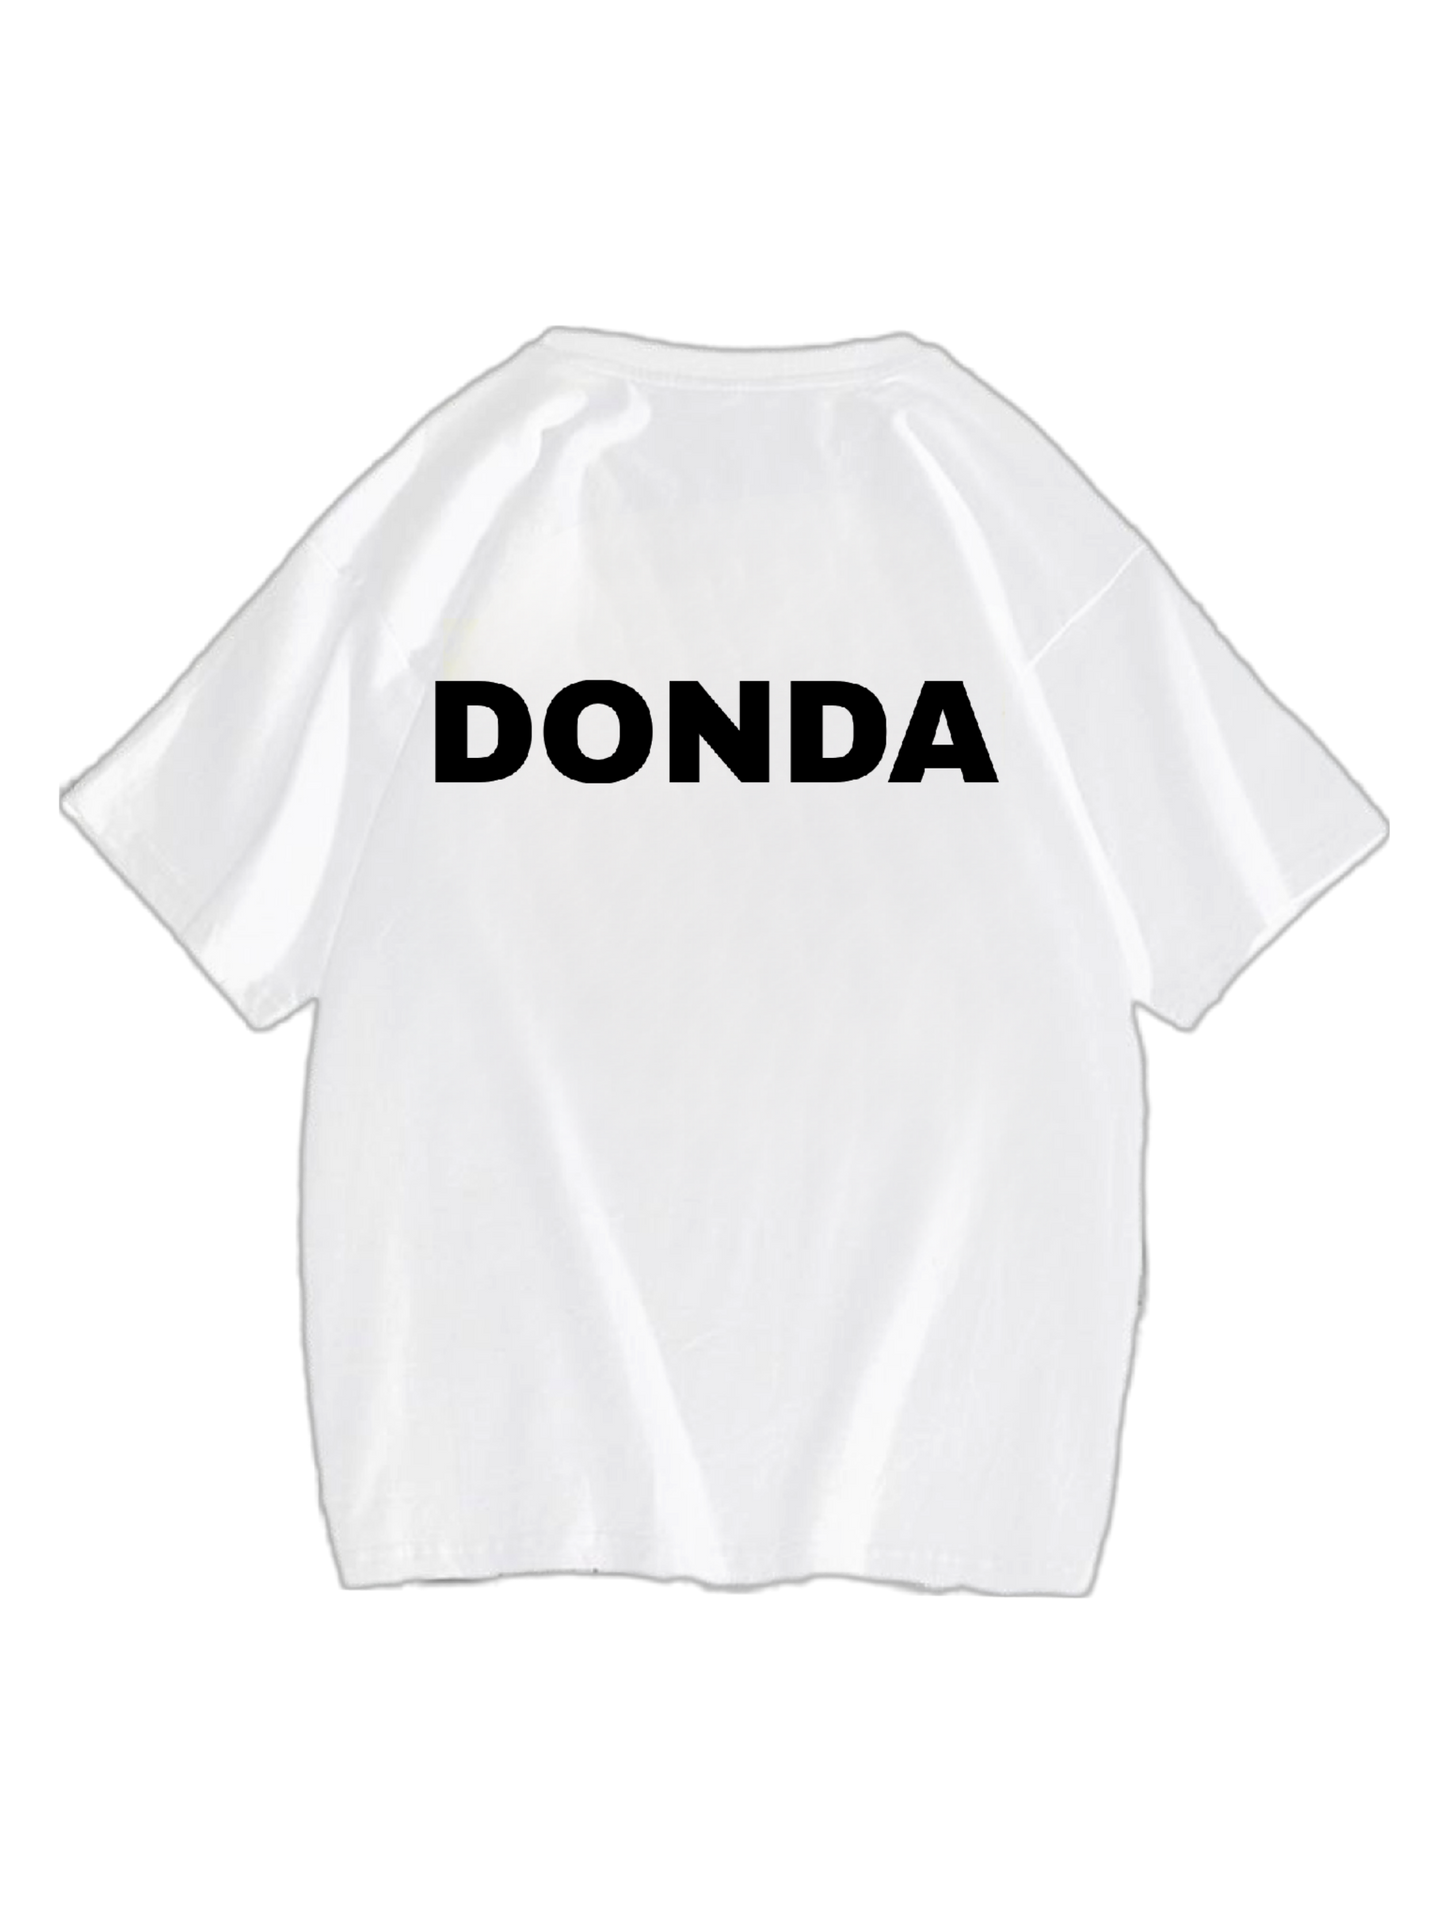 'Donda' tee